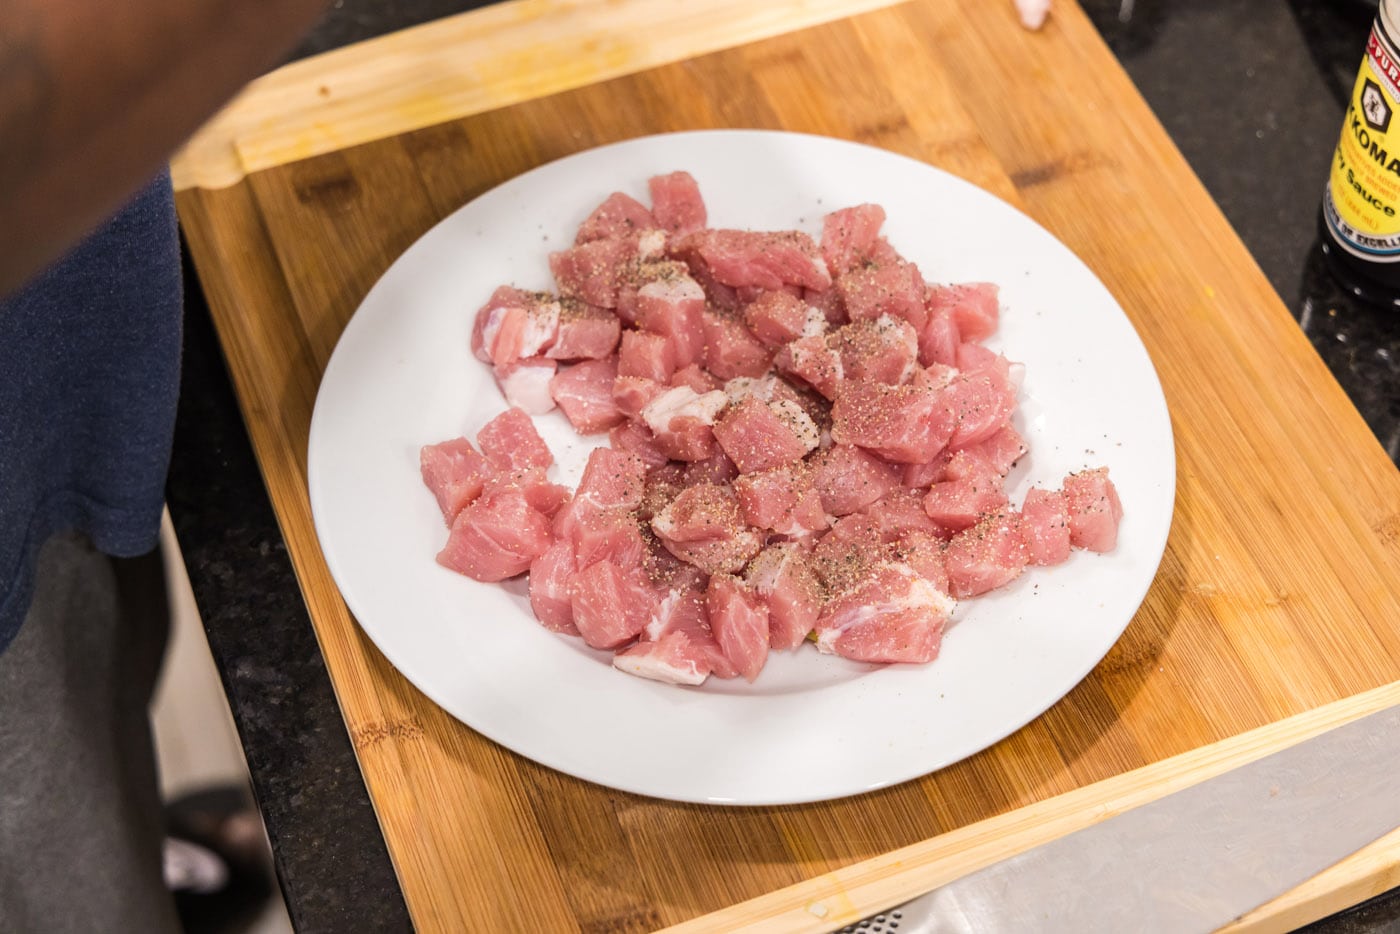 diced boneless pork chops on a plate